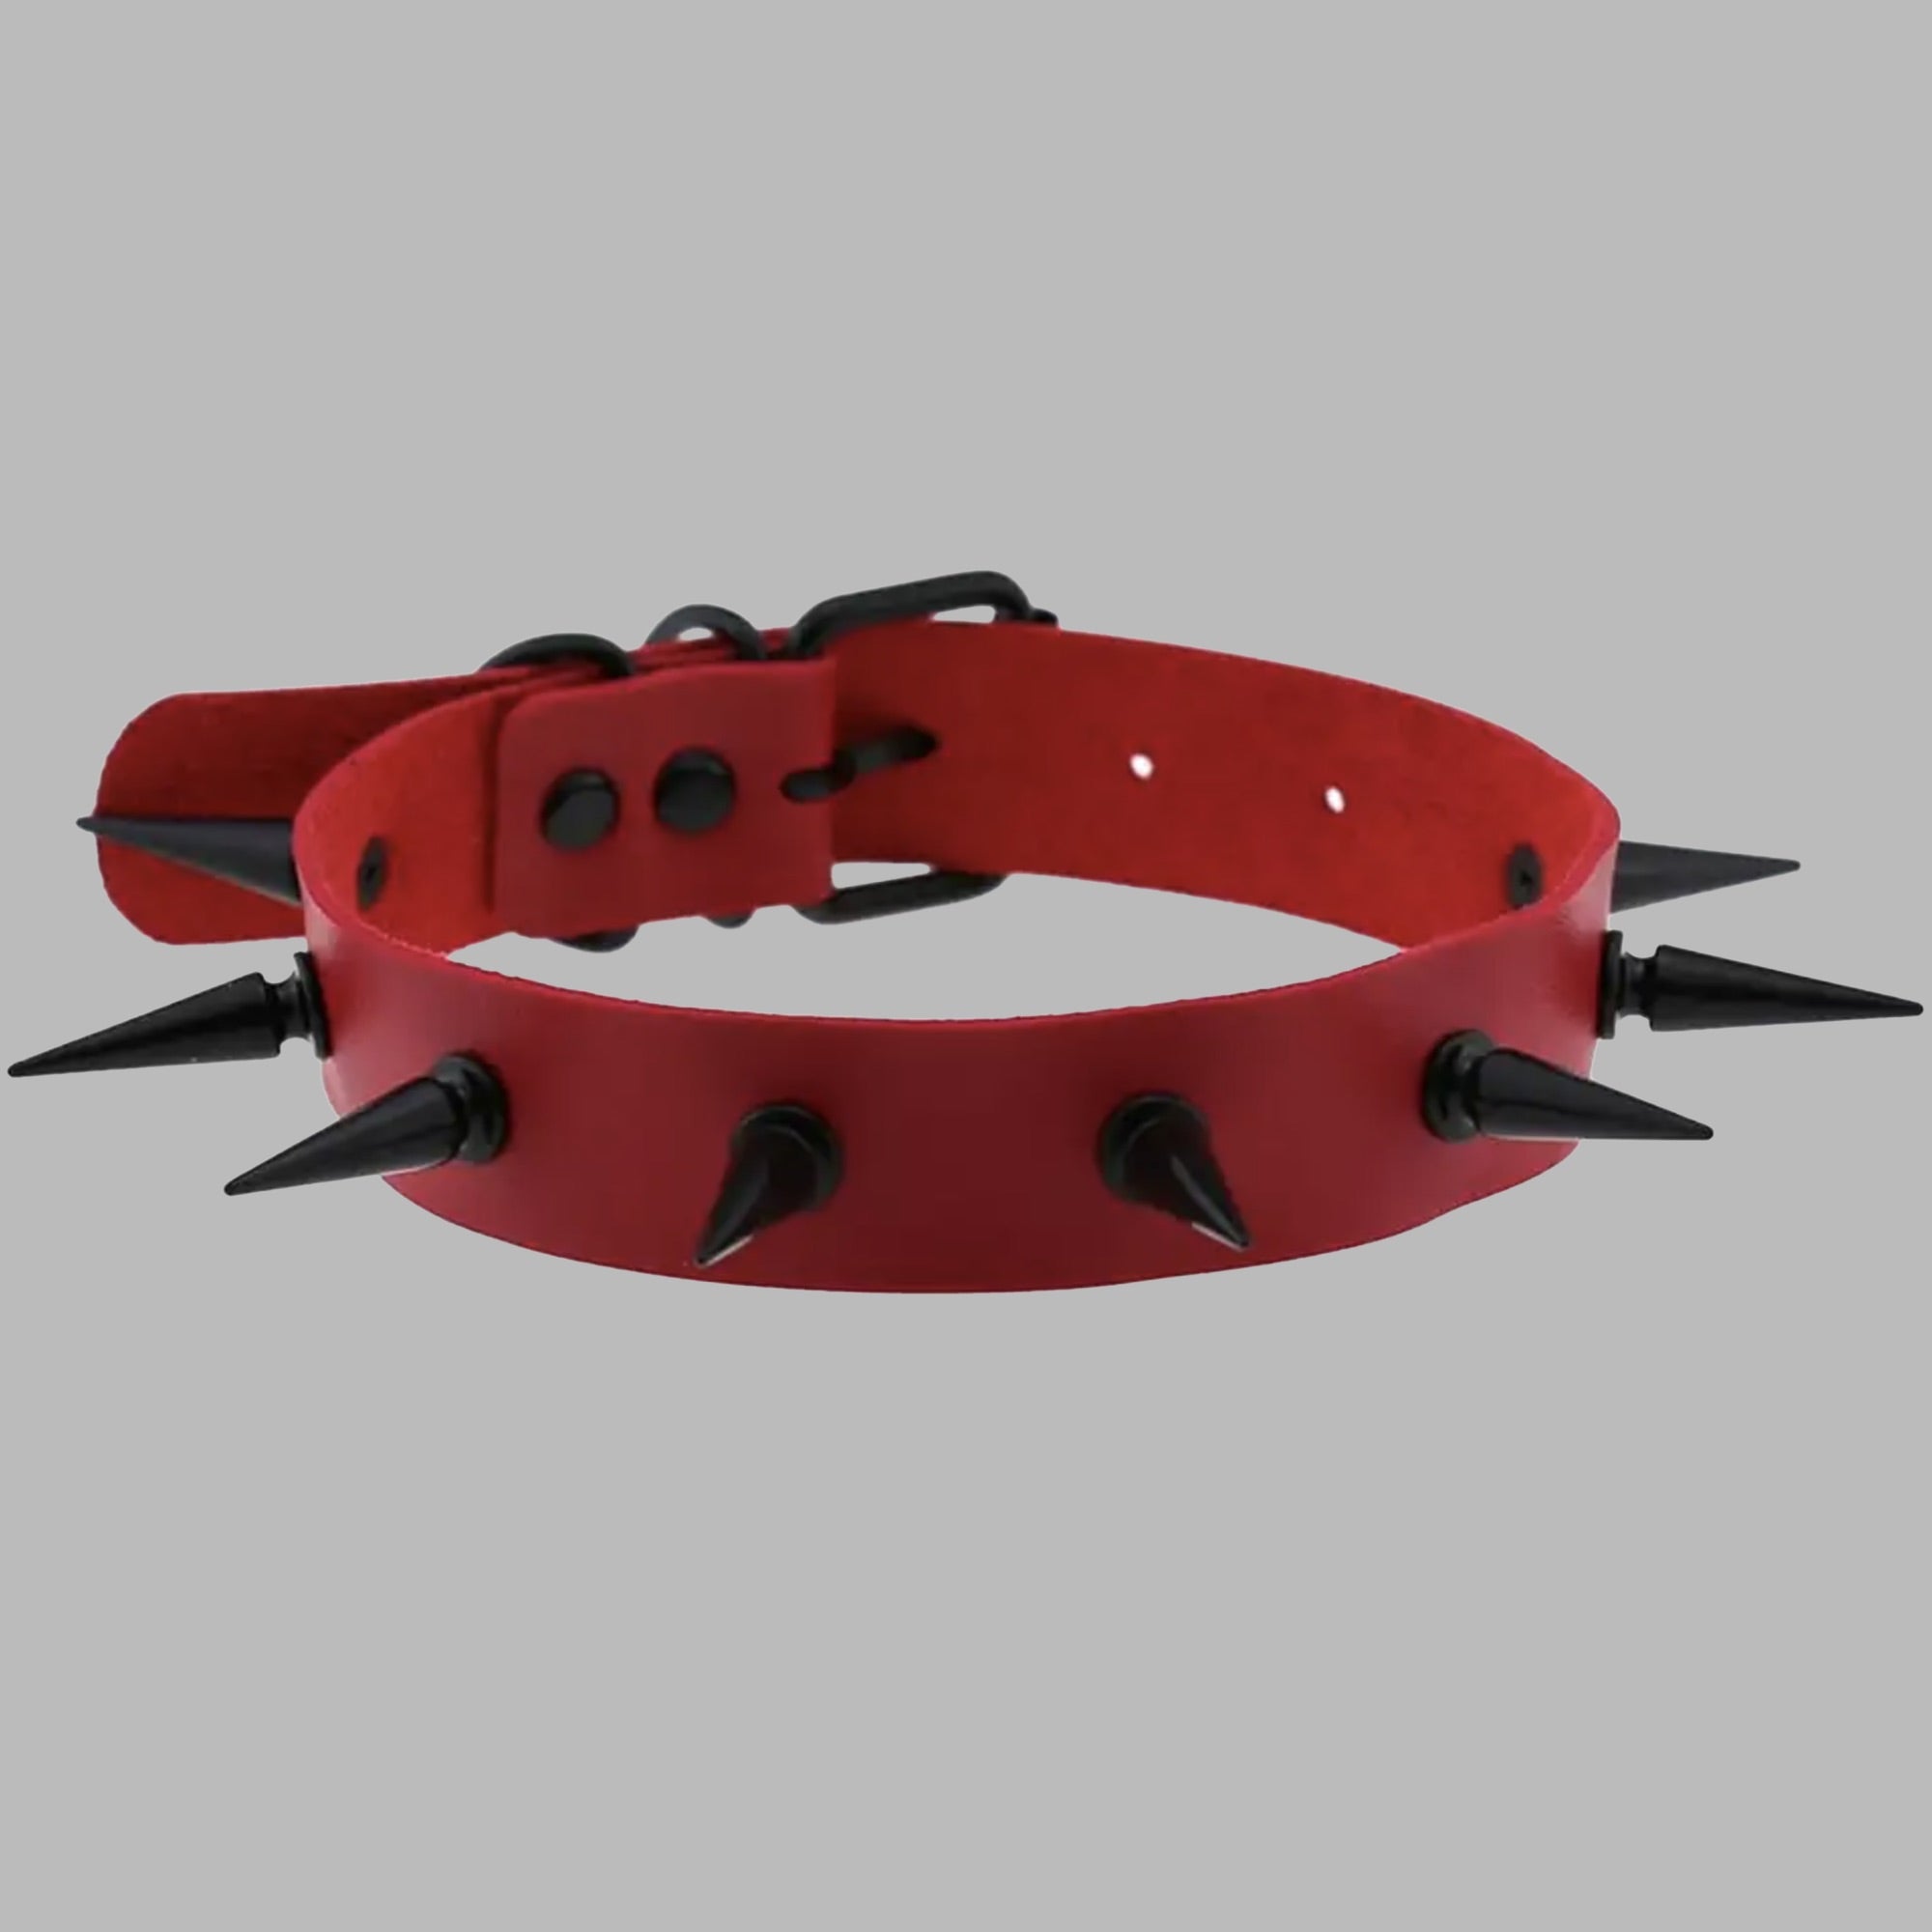 2 Inch Spike Collar - Red & Black